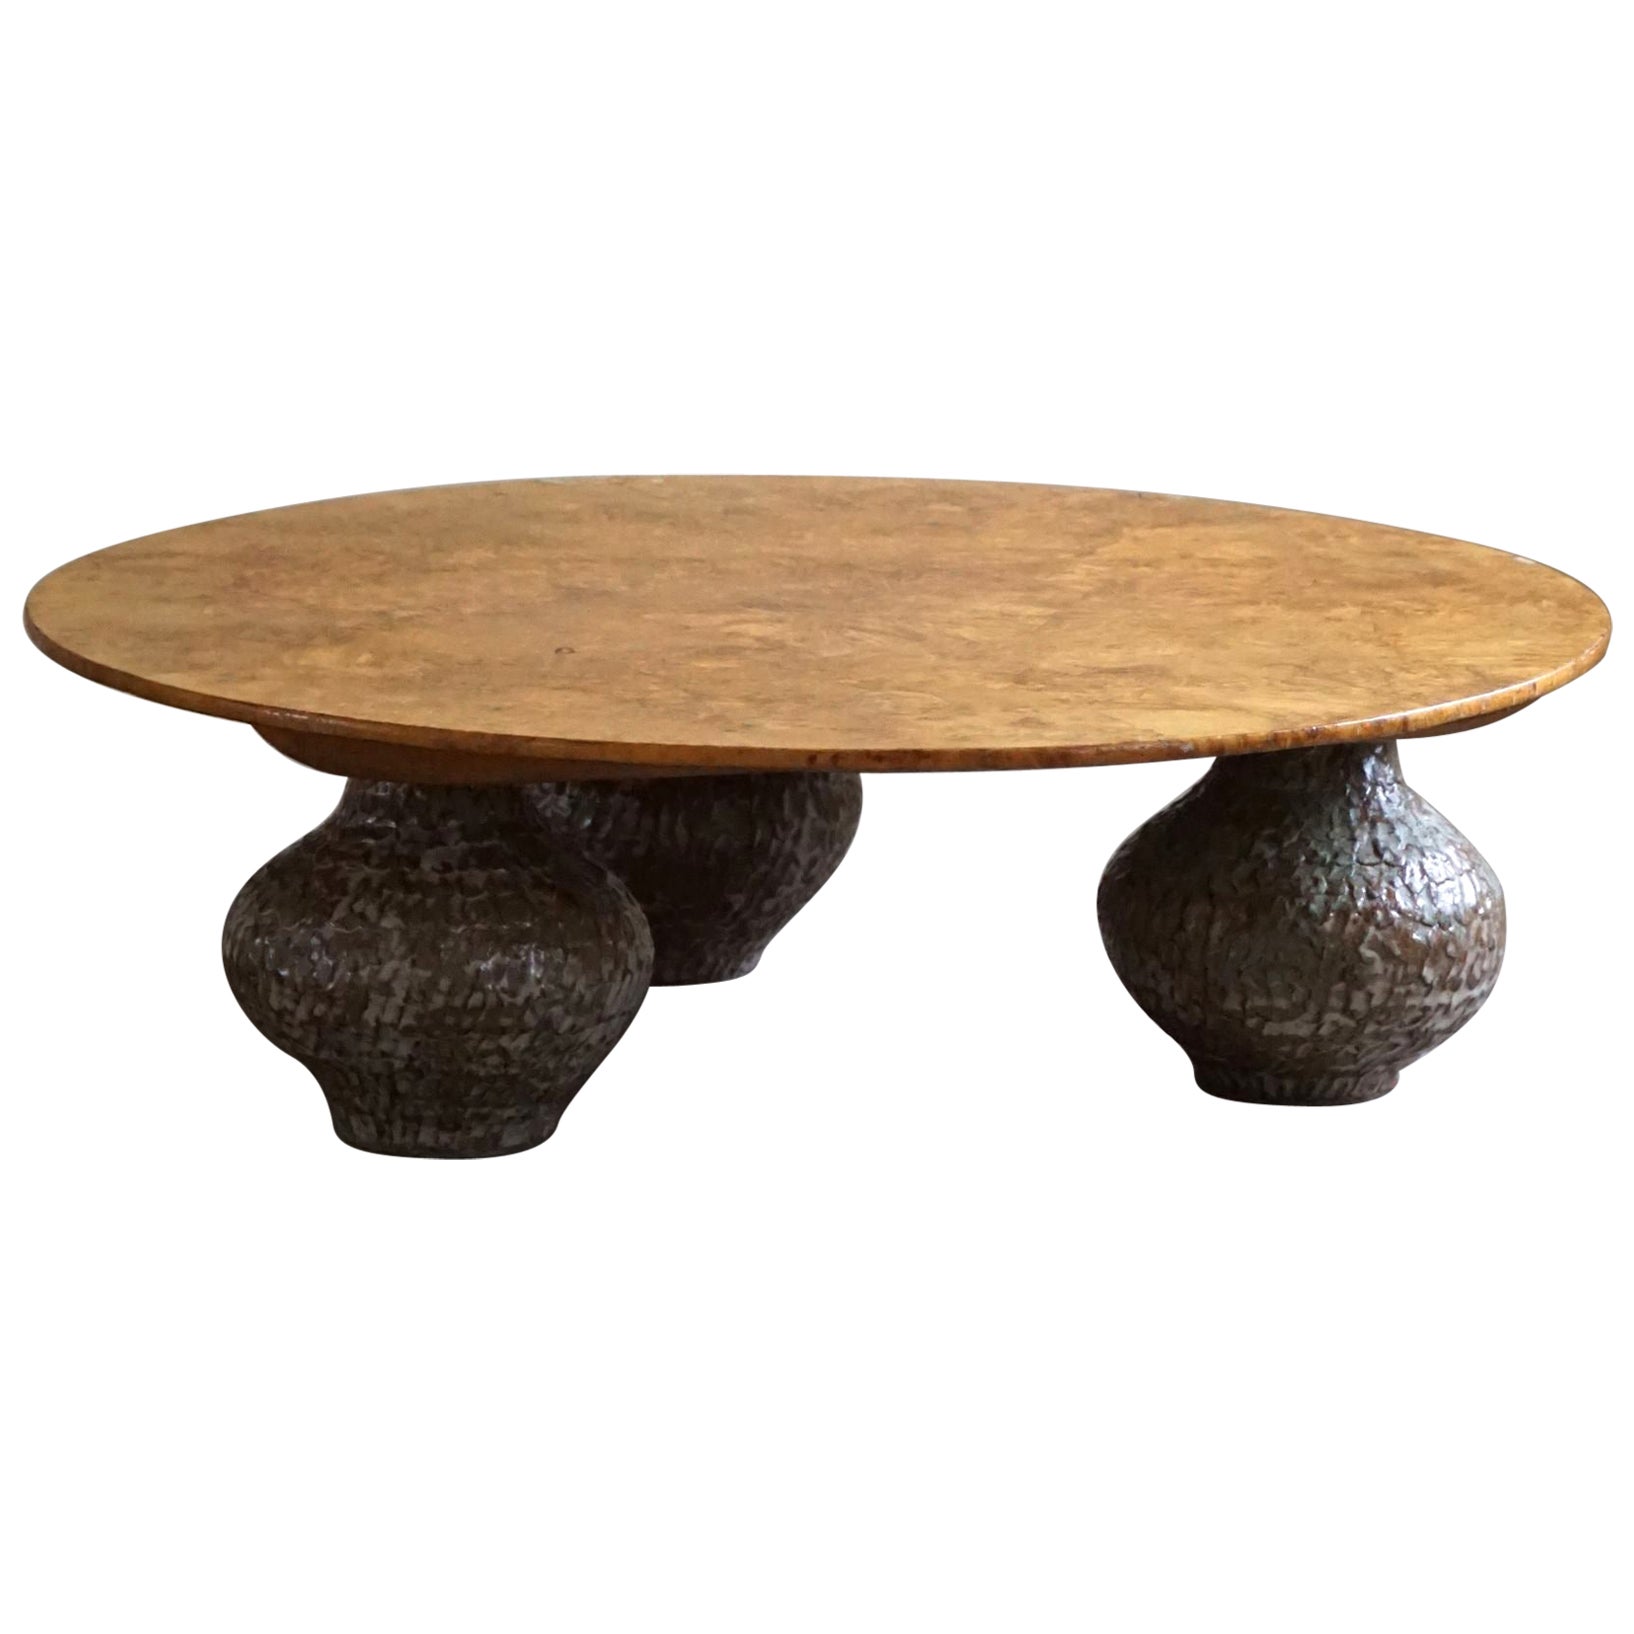 A Burl Table by eliaselias x Ole Victor, Ceramic & Birch, Danish Design, 2023 For Sale